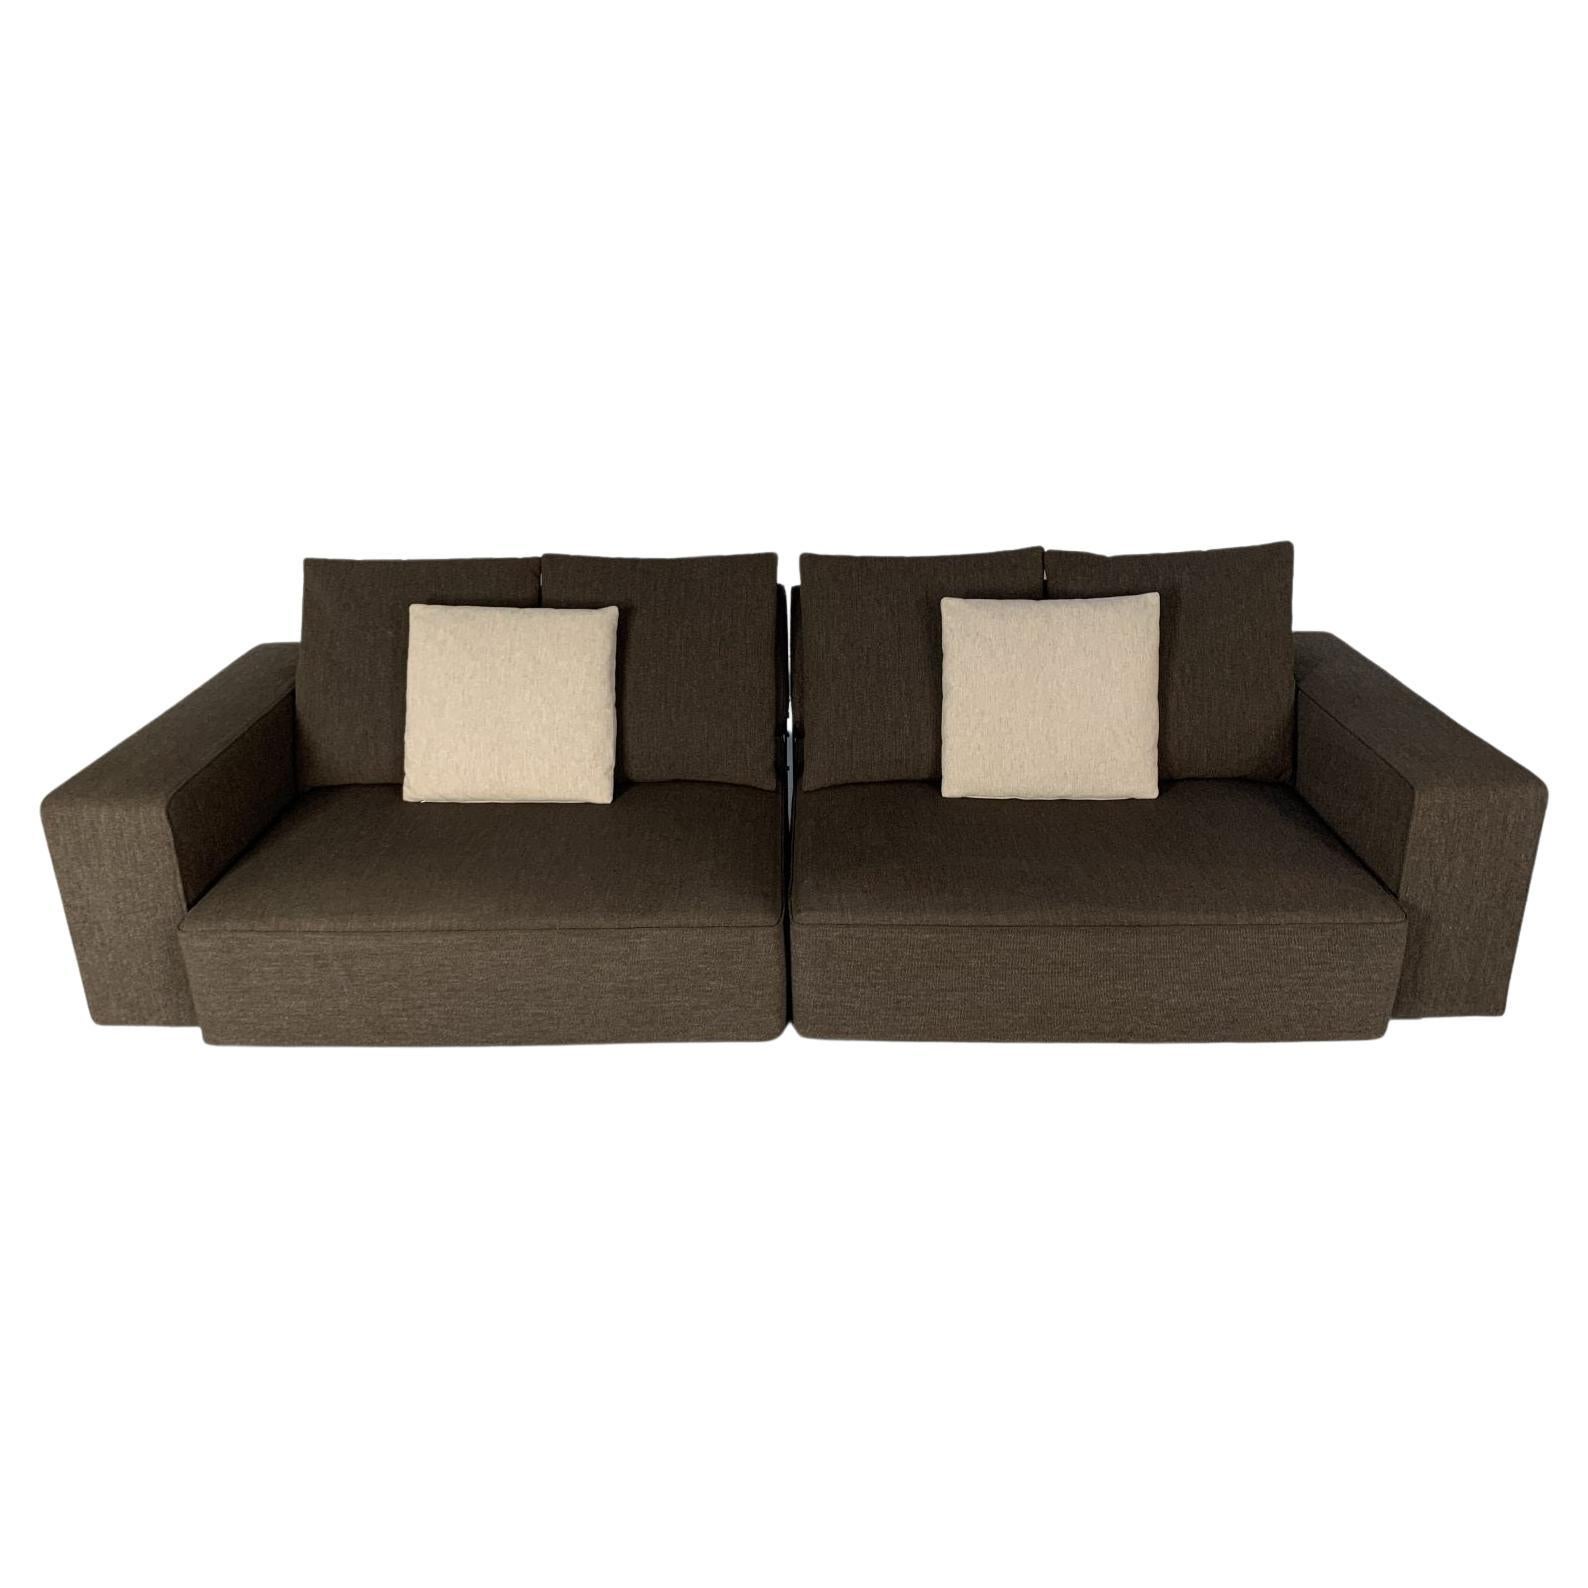 B&B Italia “Andy ’13” 2-Seat Sofa, in Dark-Brown Fabric For Sale